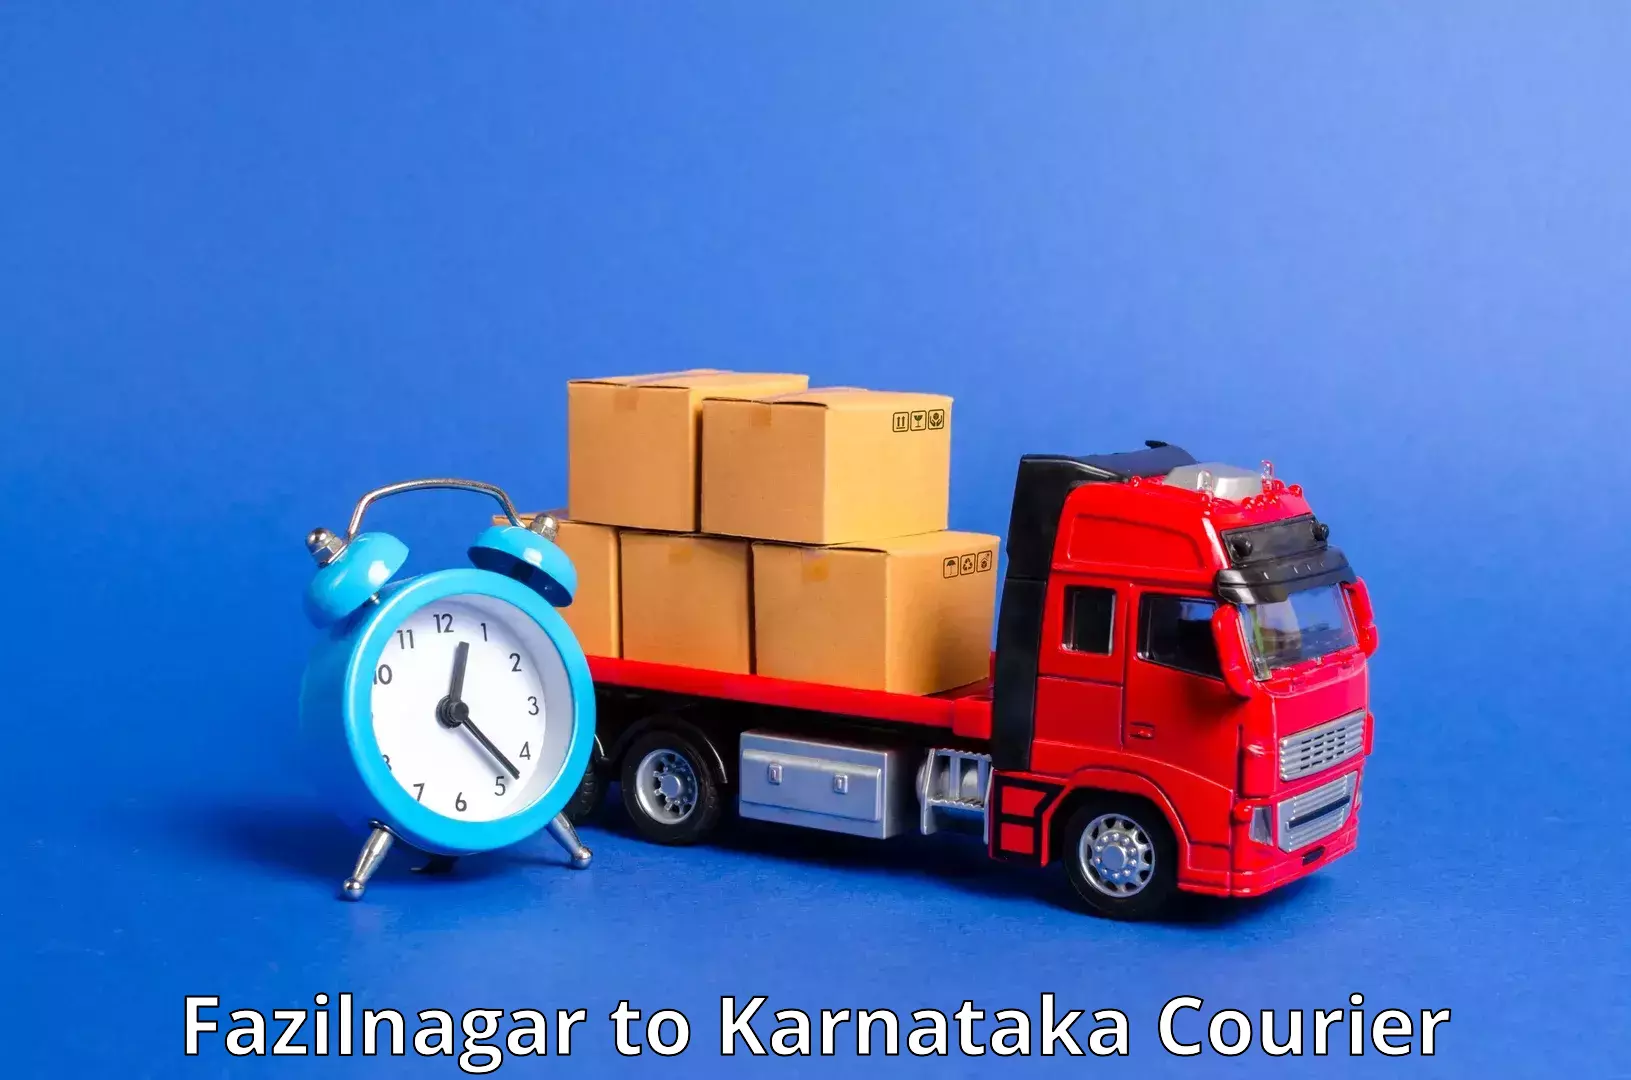 Express postal services Fazilnagar to Karnataka